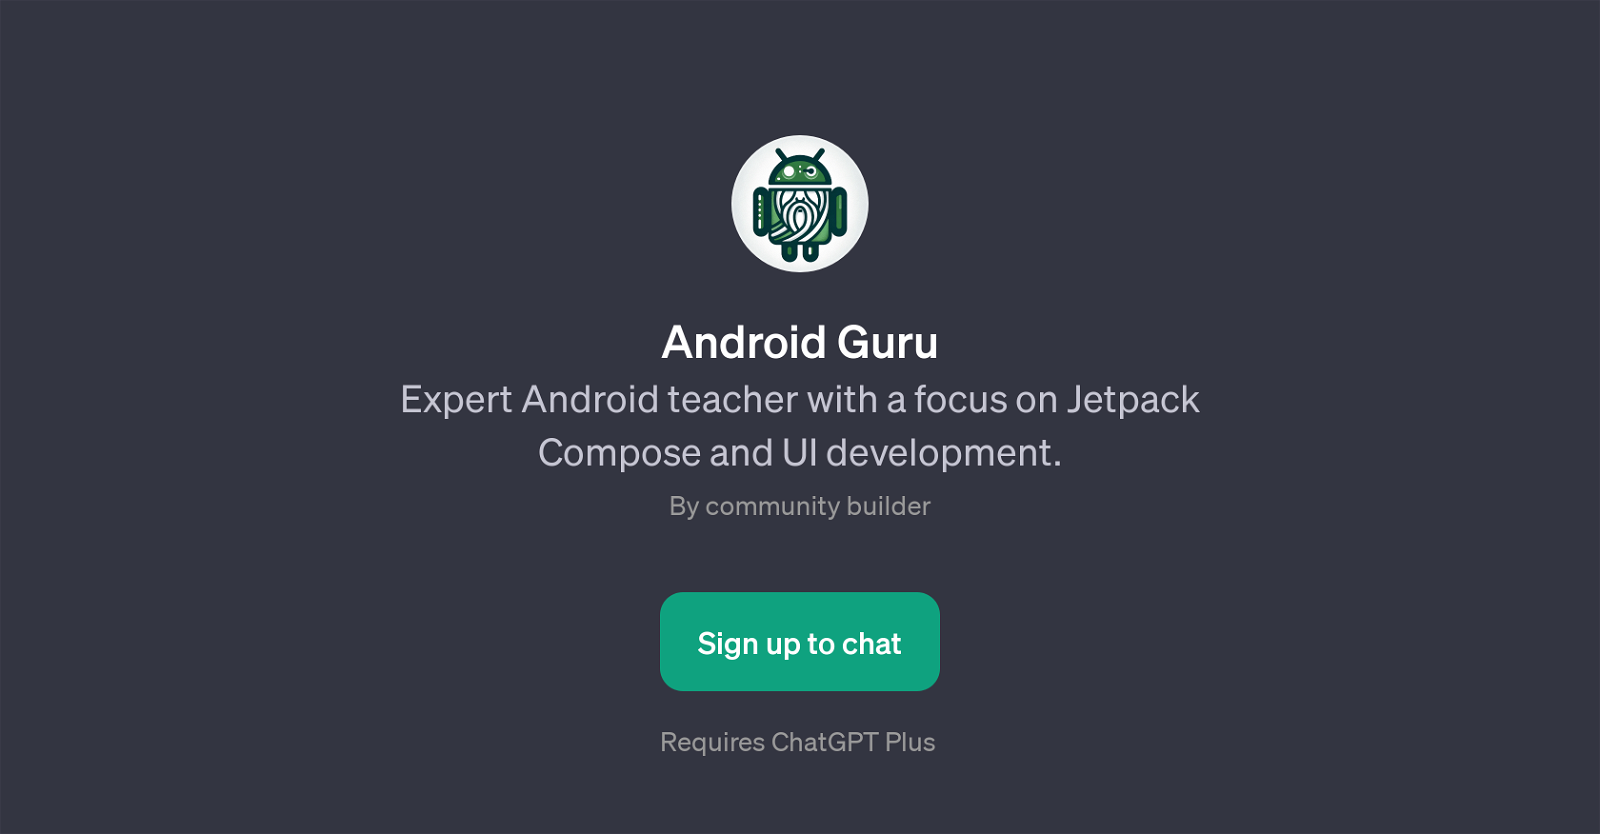 Android Guru website